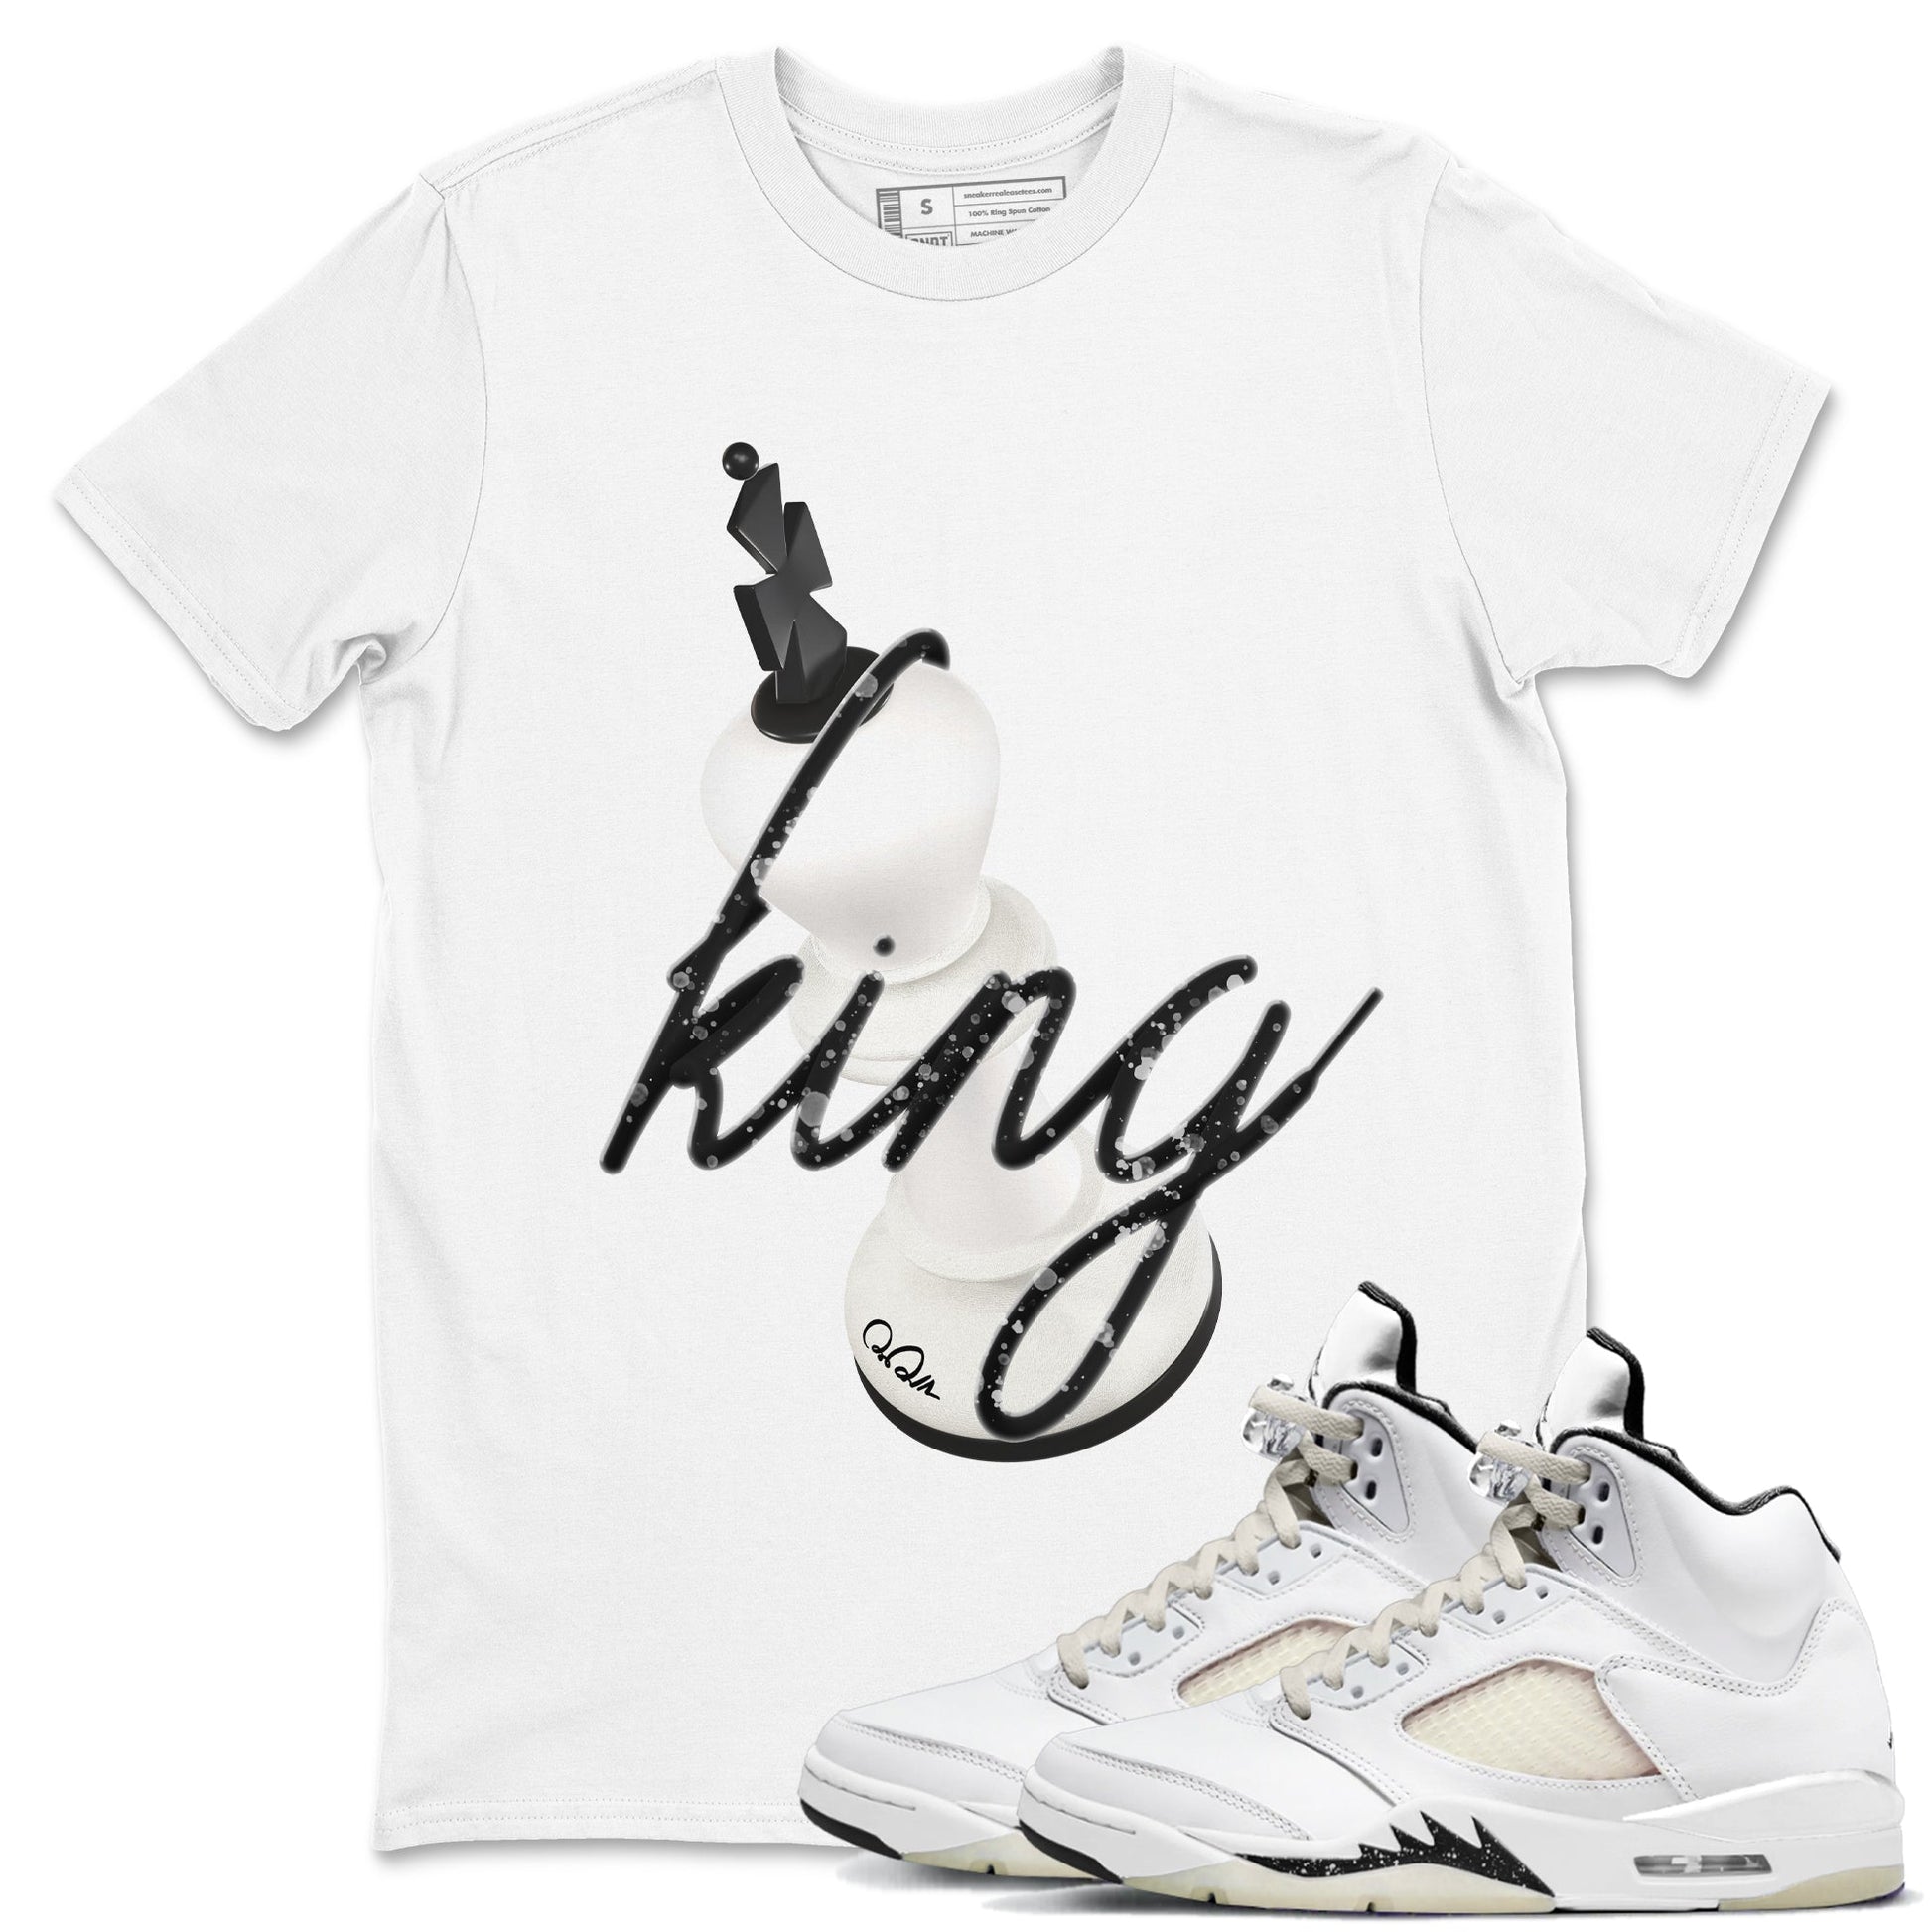 5s Sail shirt to match jordans 3D King sneaker tees Air Jordan 5 Sail SNRT Sneaker Release Tees unisex cotton White 1 crew neck shirt